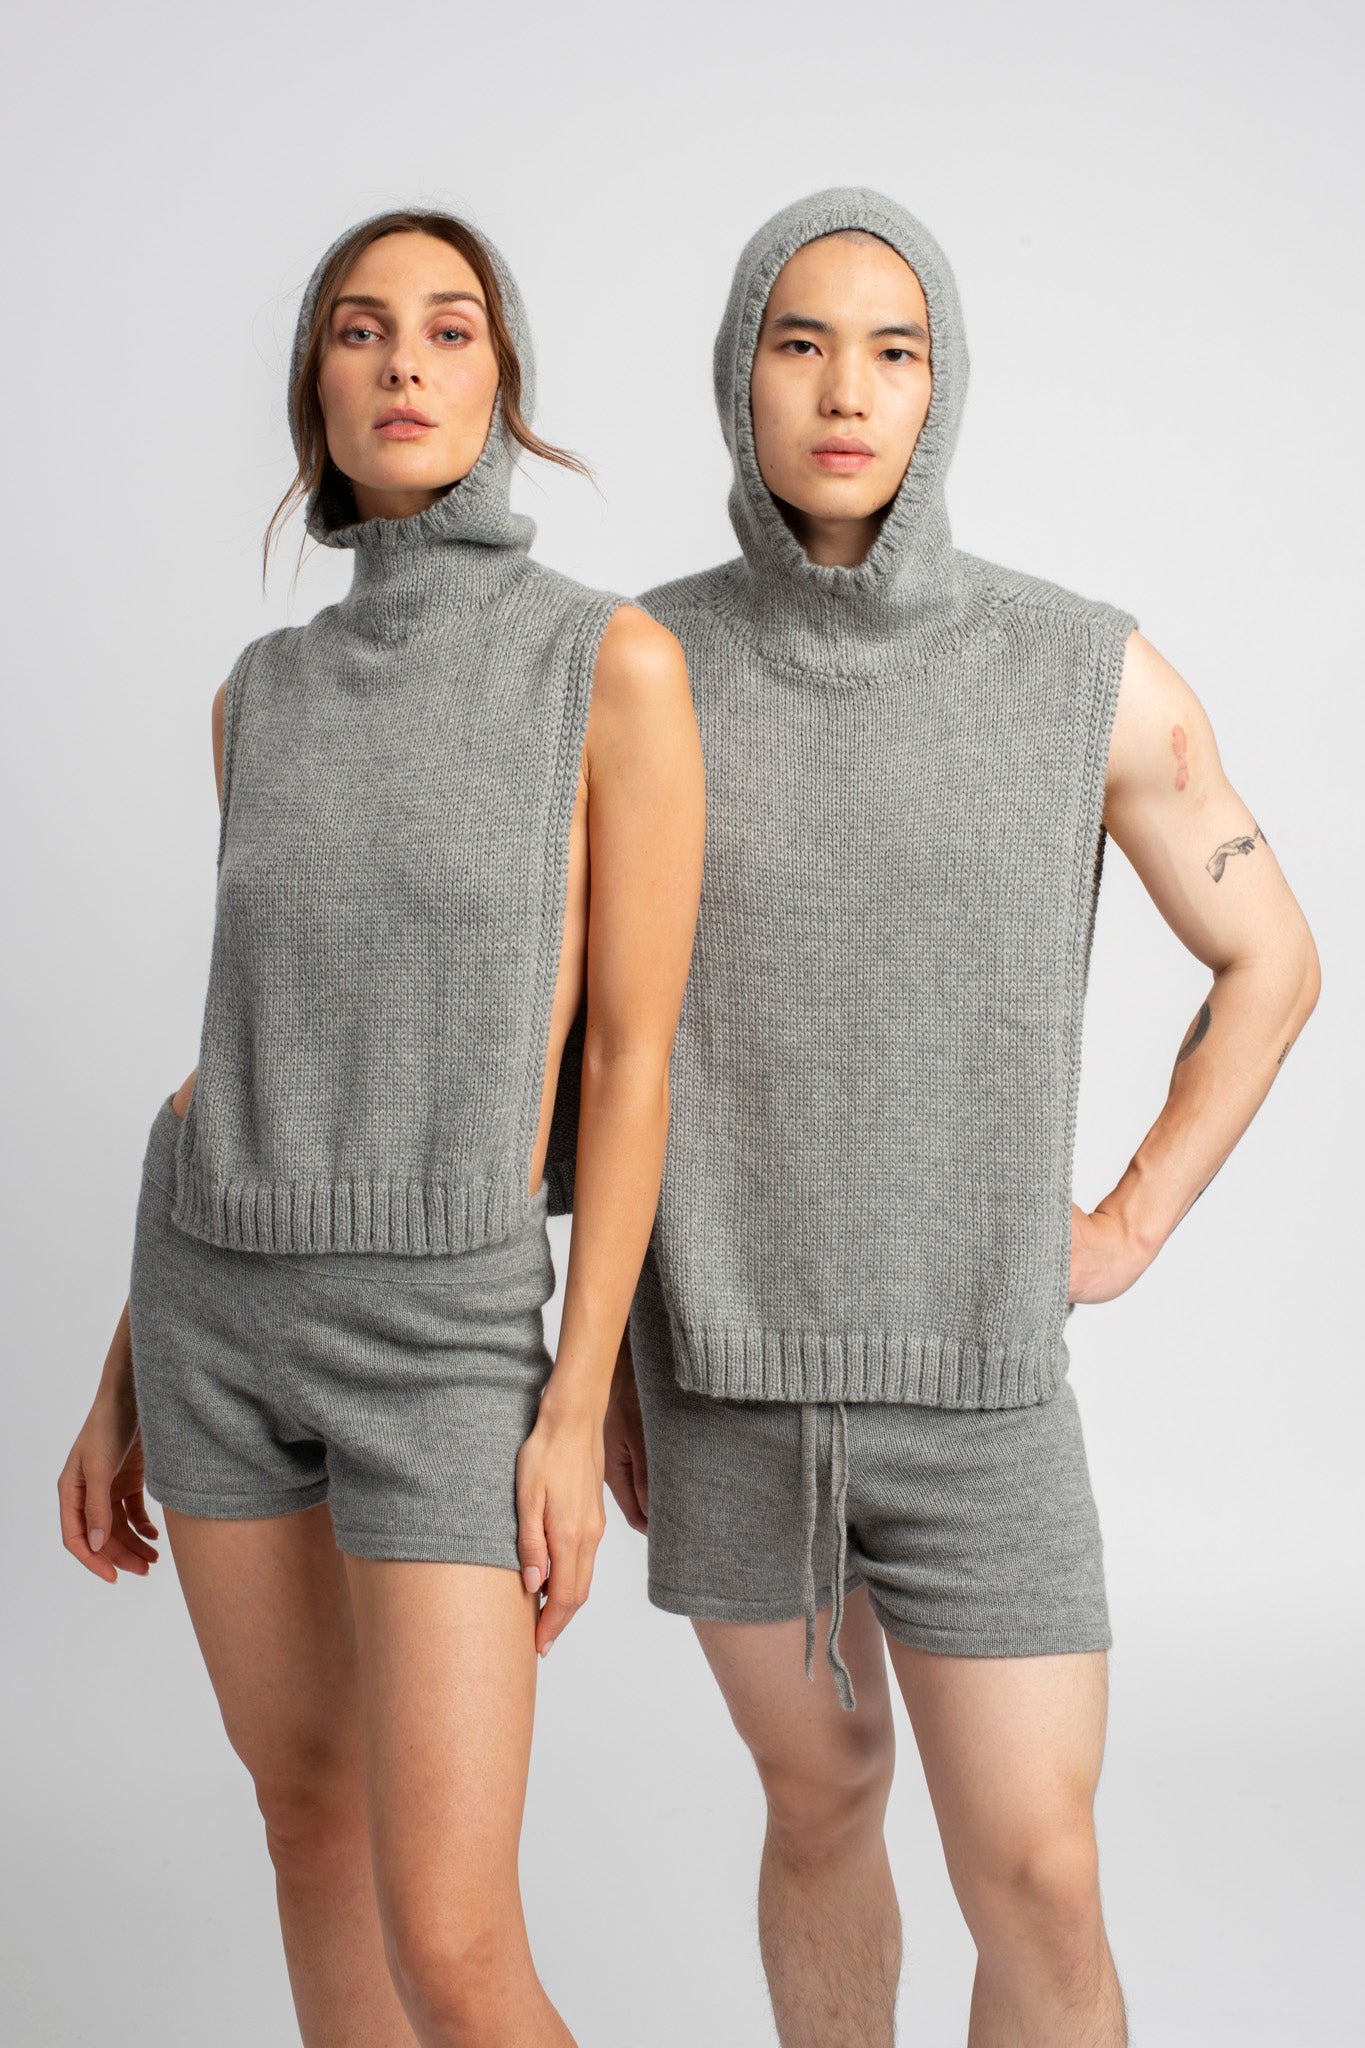 Two models wearing poncho in light grey alpaca wool wearing hoods facing forward